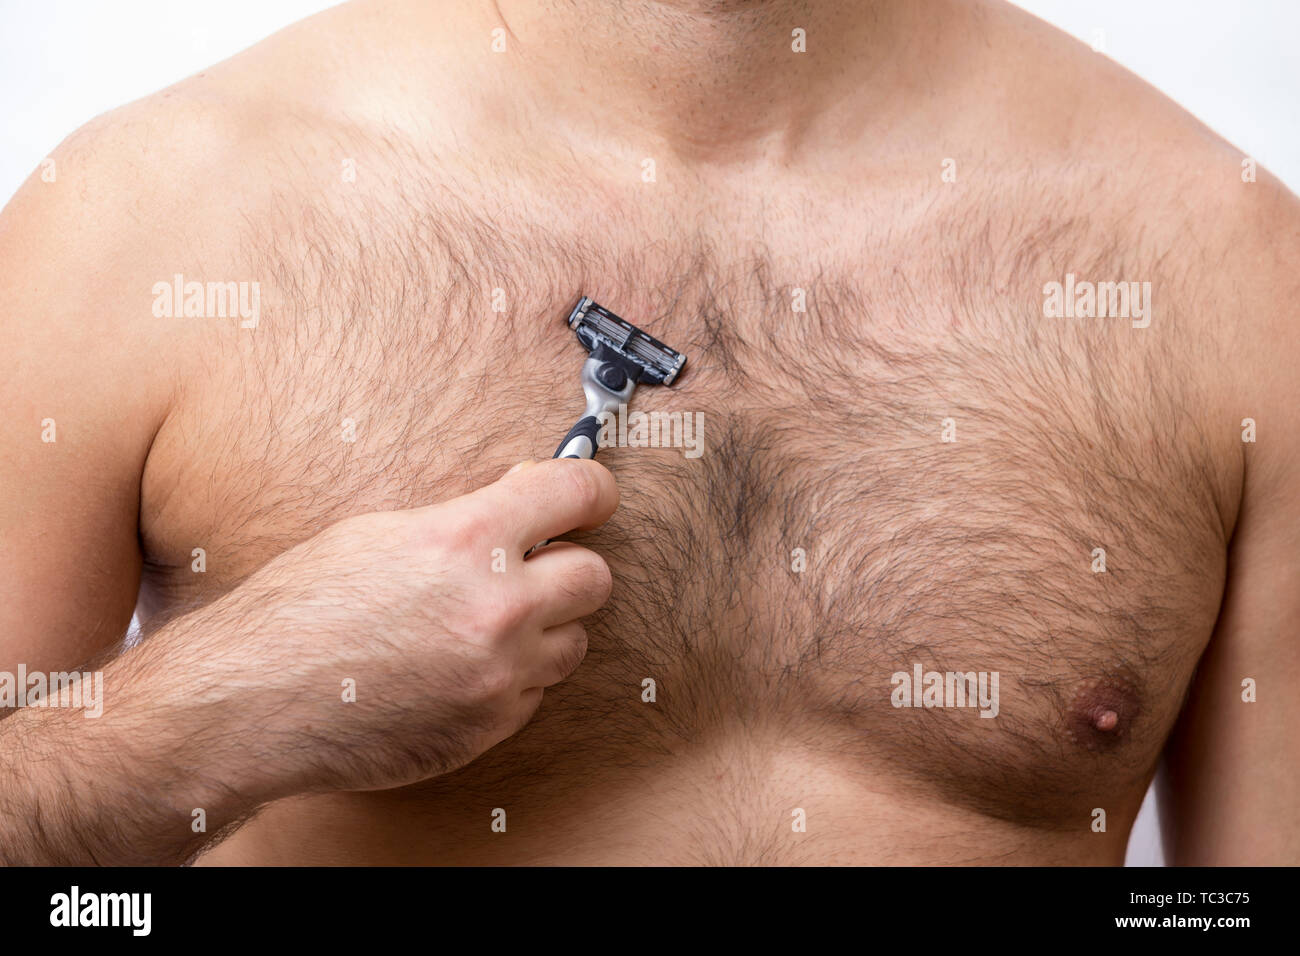 как брить грудь у мужчин (119) фото